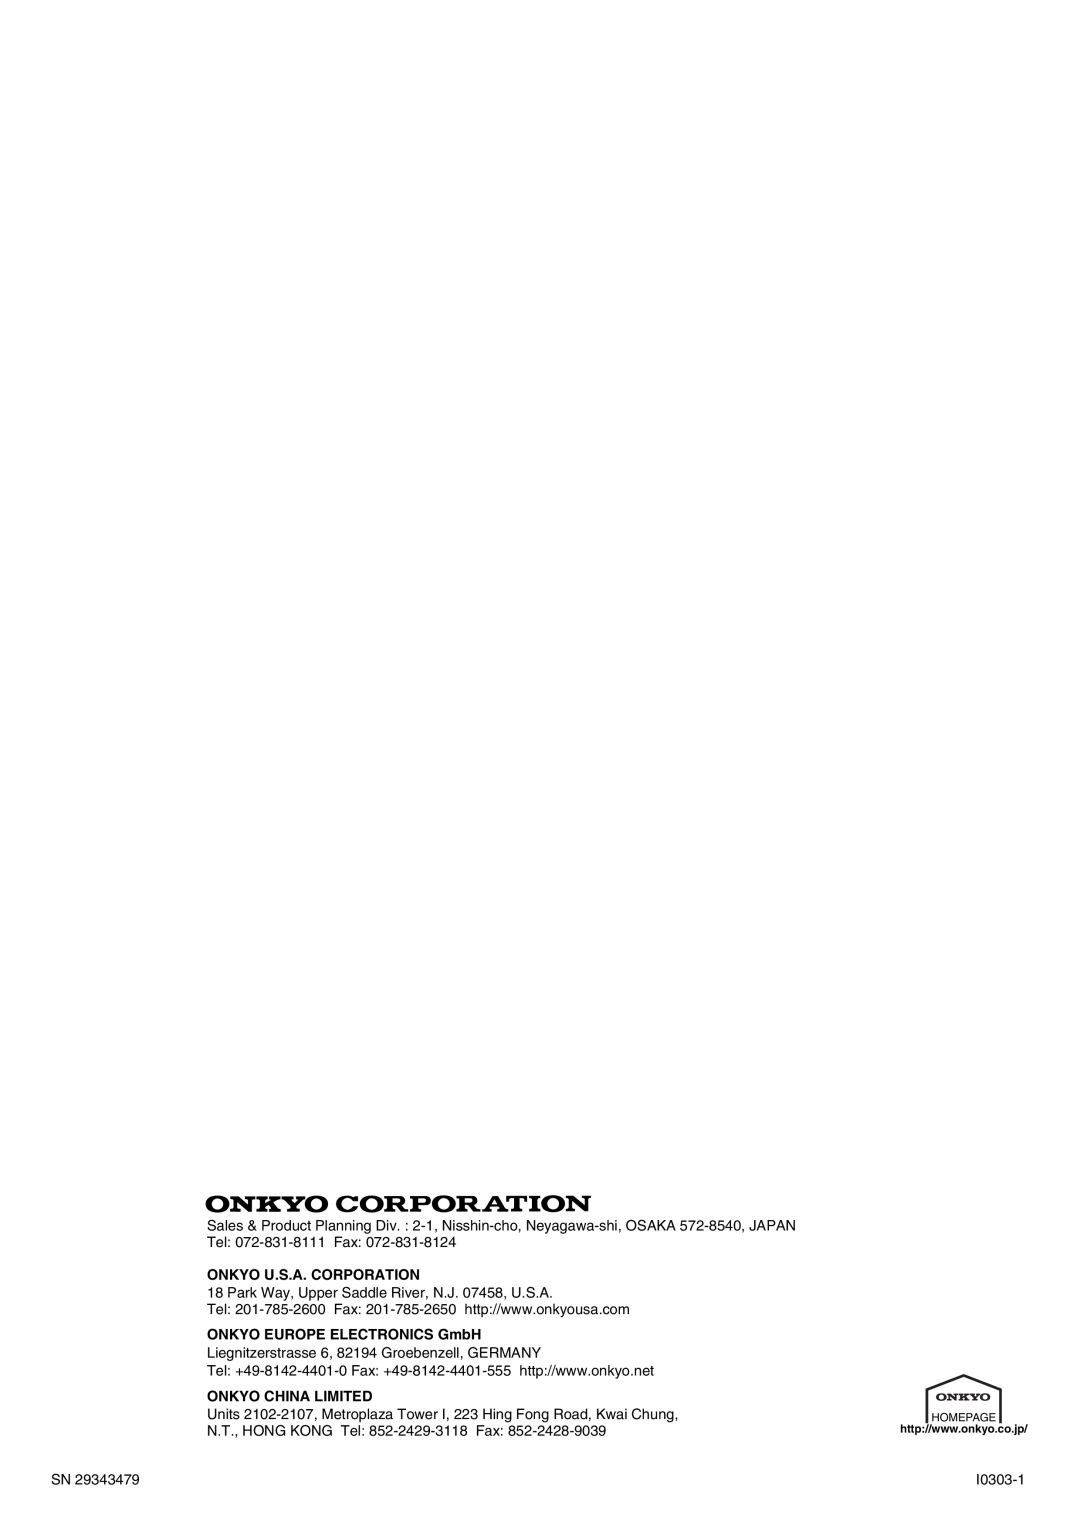 Onkyo HT-R510 instruction manual Onkyo U.S.A. Corporation, ONKYO EUROPE ELECTRONICS GmbH, Onkyo China Limited 